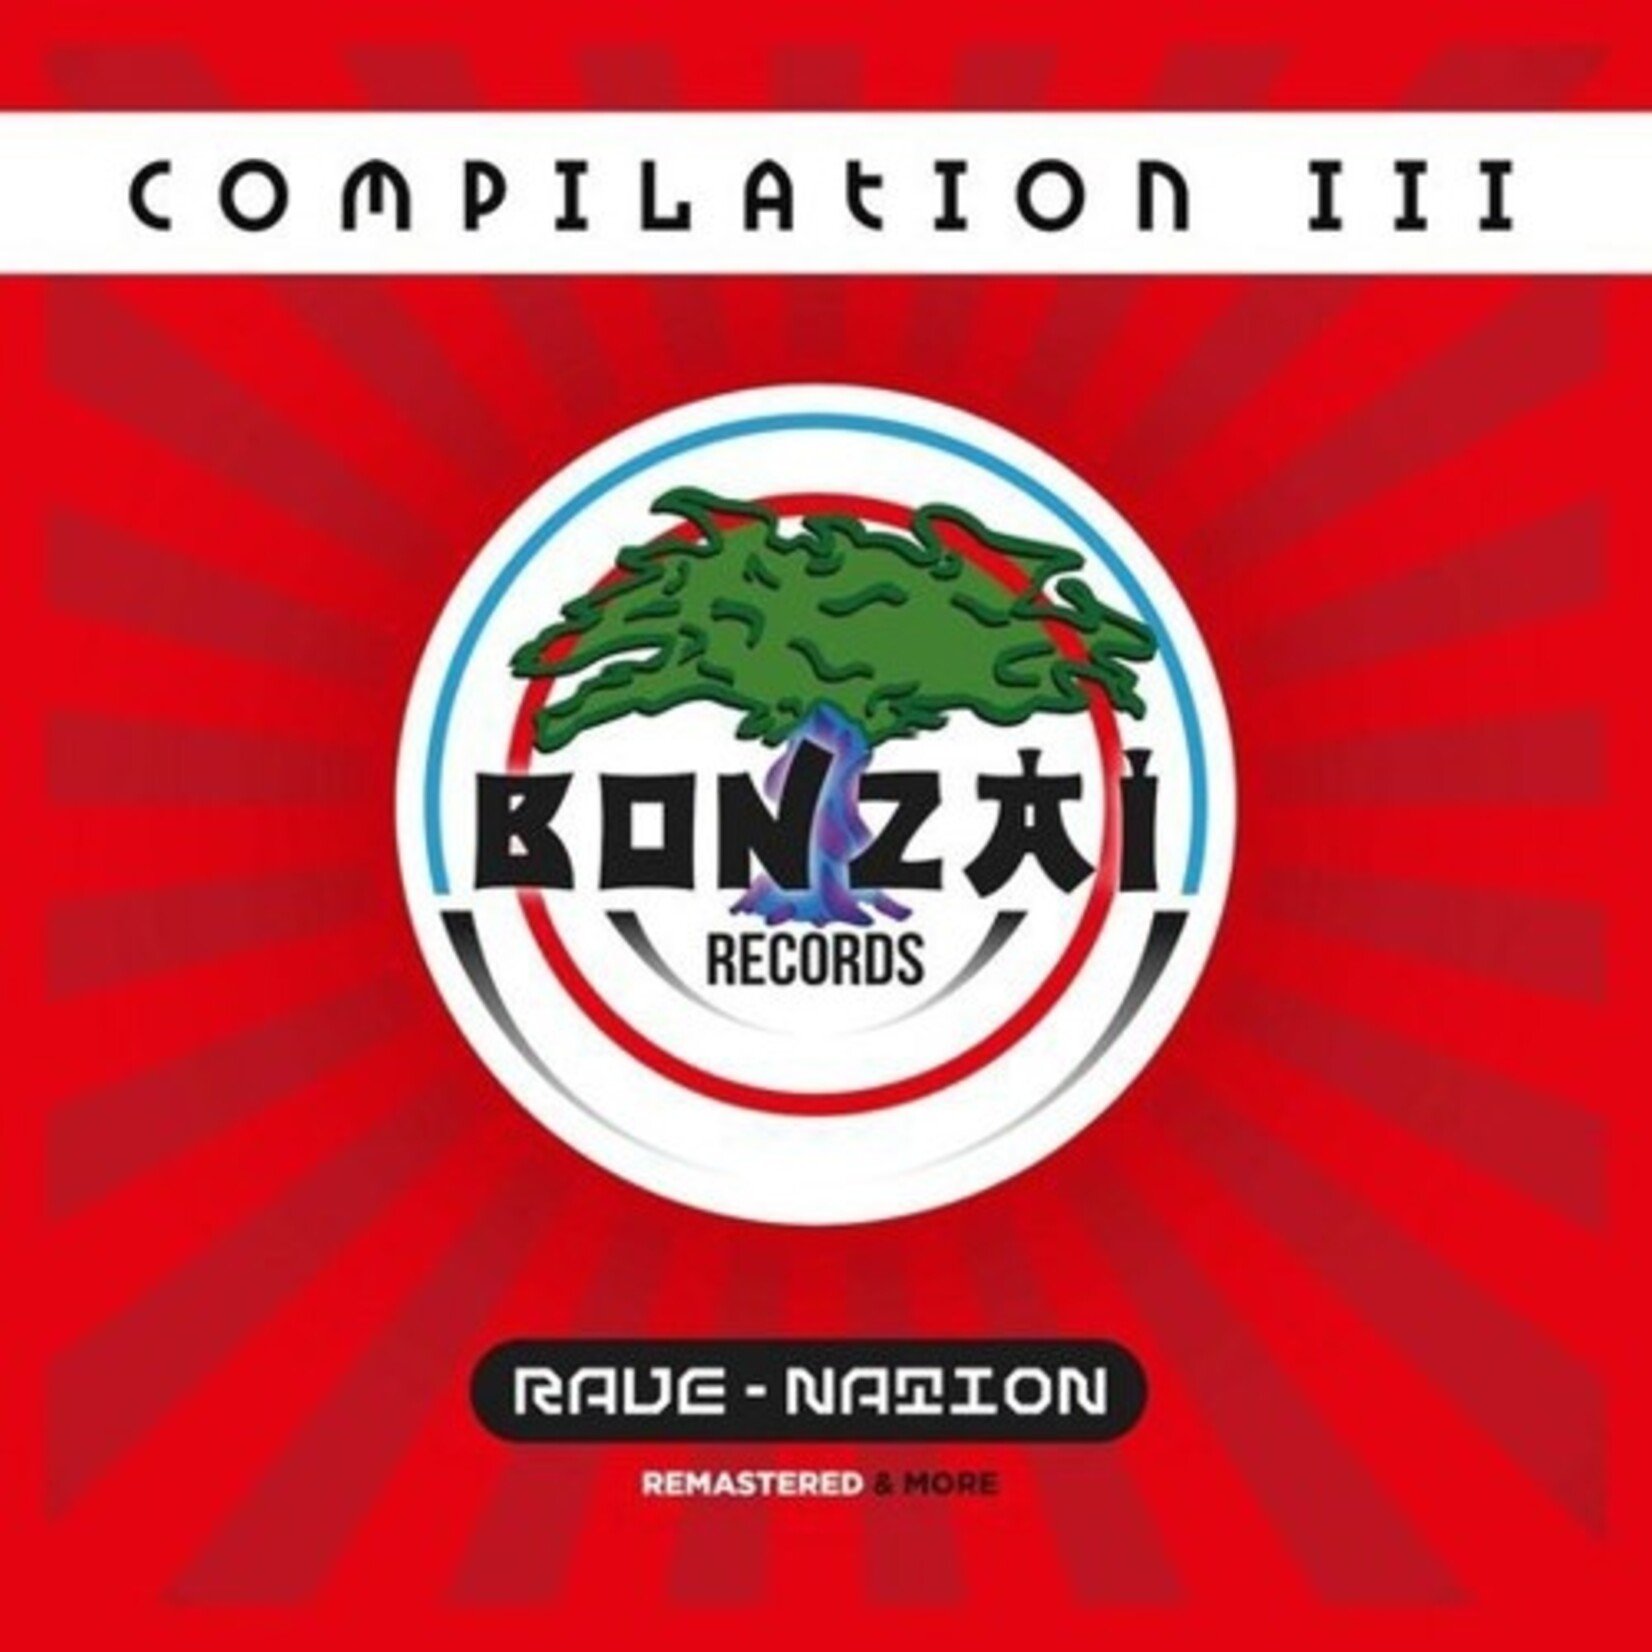 V/A - Bonzai Compilation III - Rave-Nation (Remastered & More)